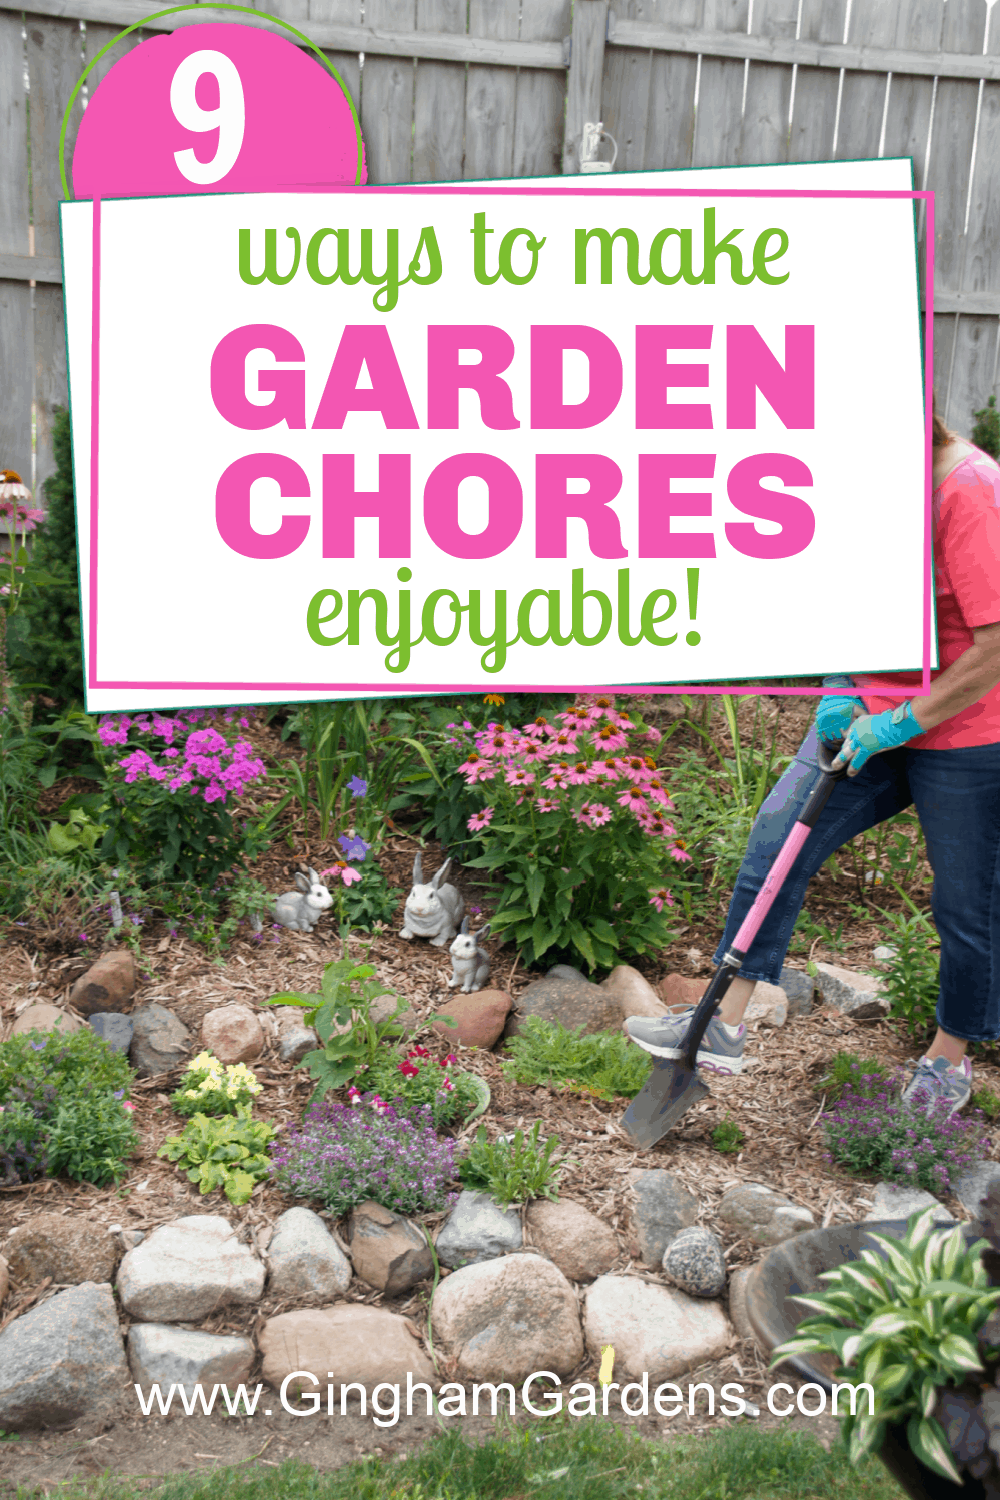 Image of Gardener working in garden with text overlay - Ways to Make Gardening Chores Enjoyable